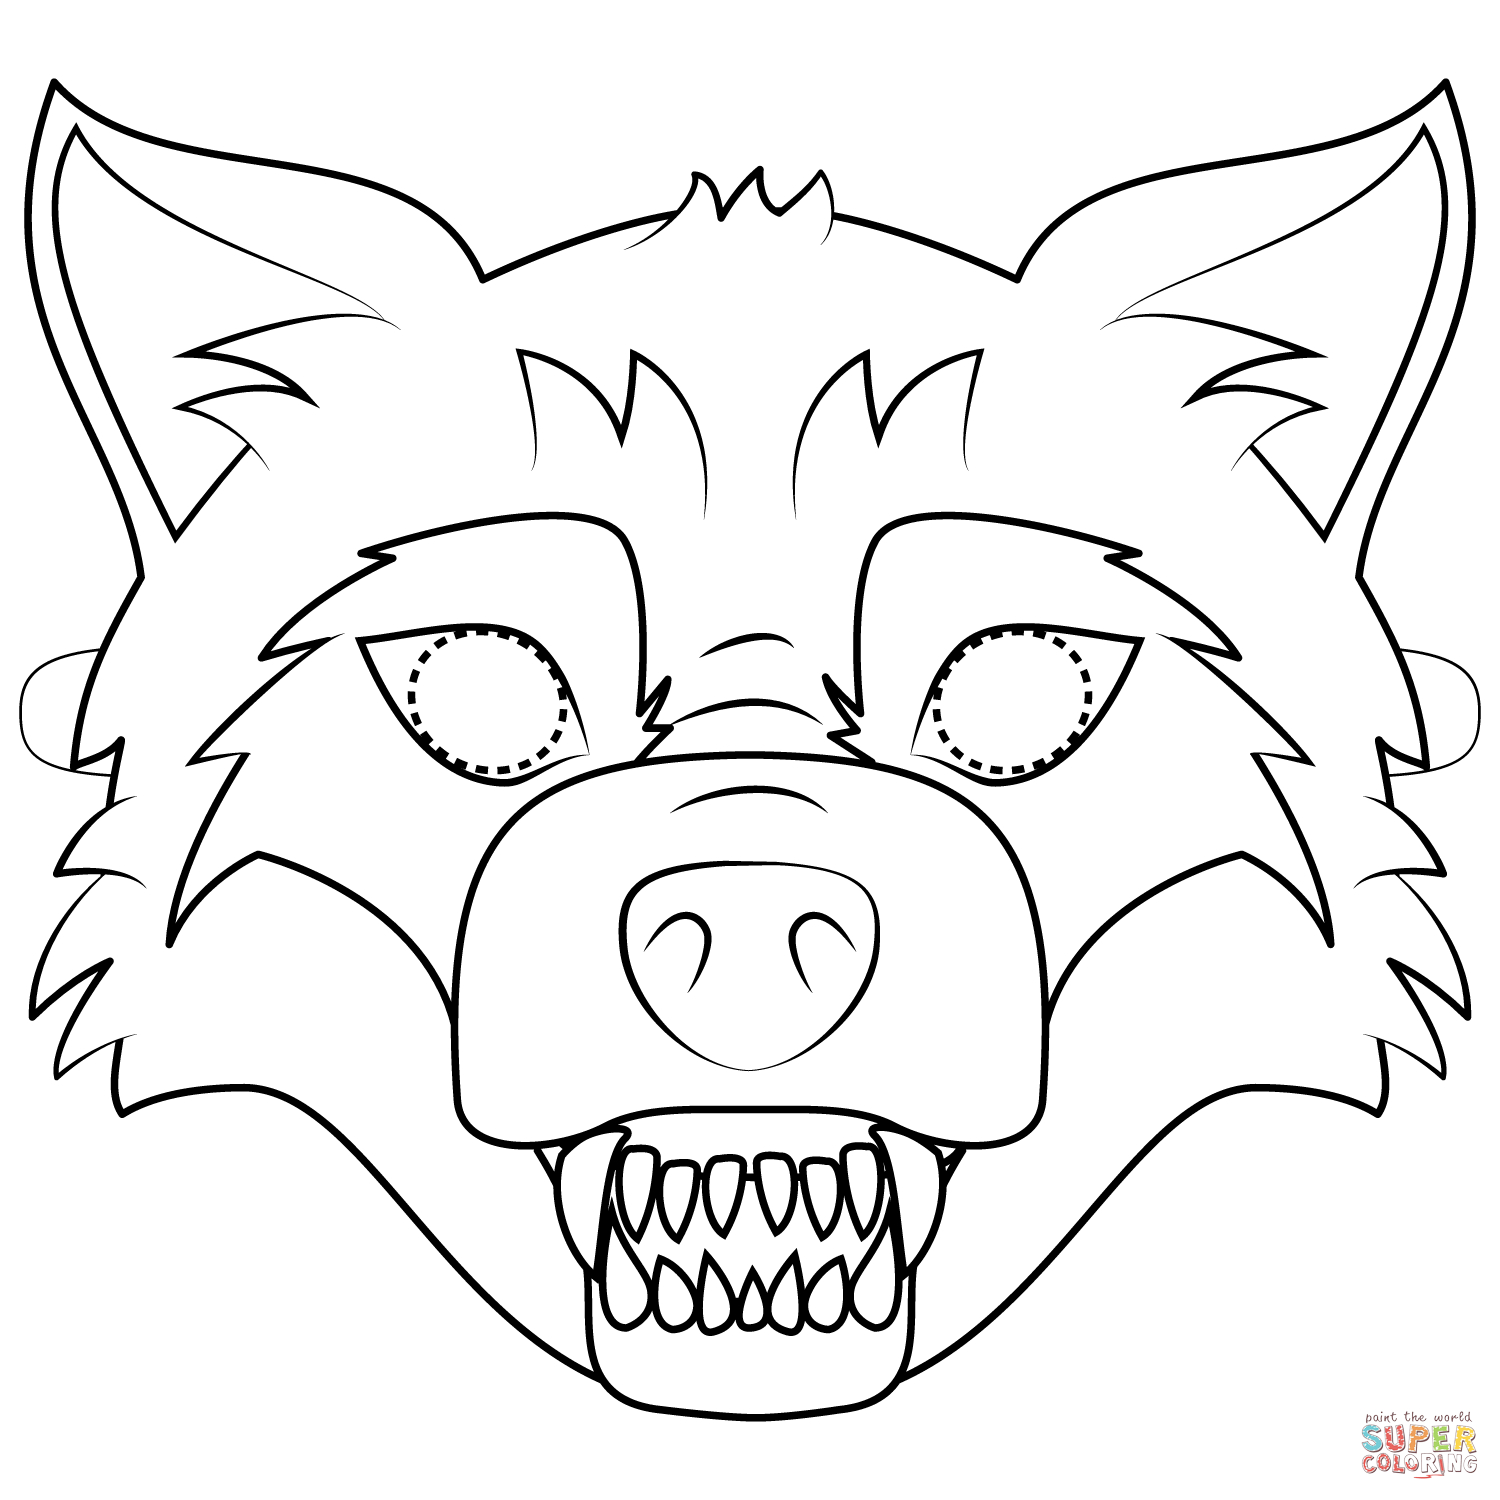 Big Bad Wolf Mask Coloring Page | Free Printable Coloring Pages - Free Printable Wolf Mask